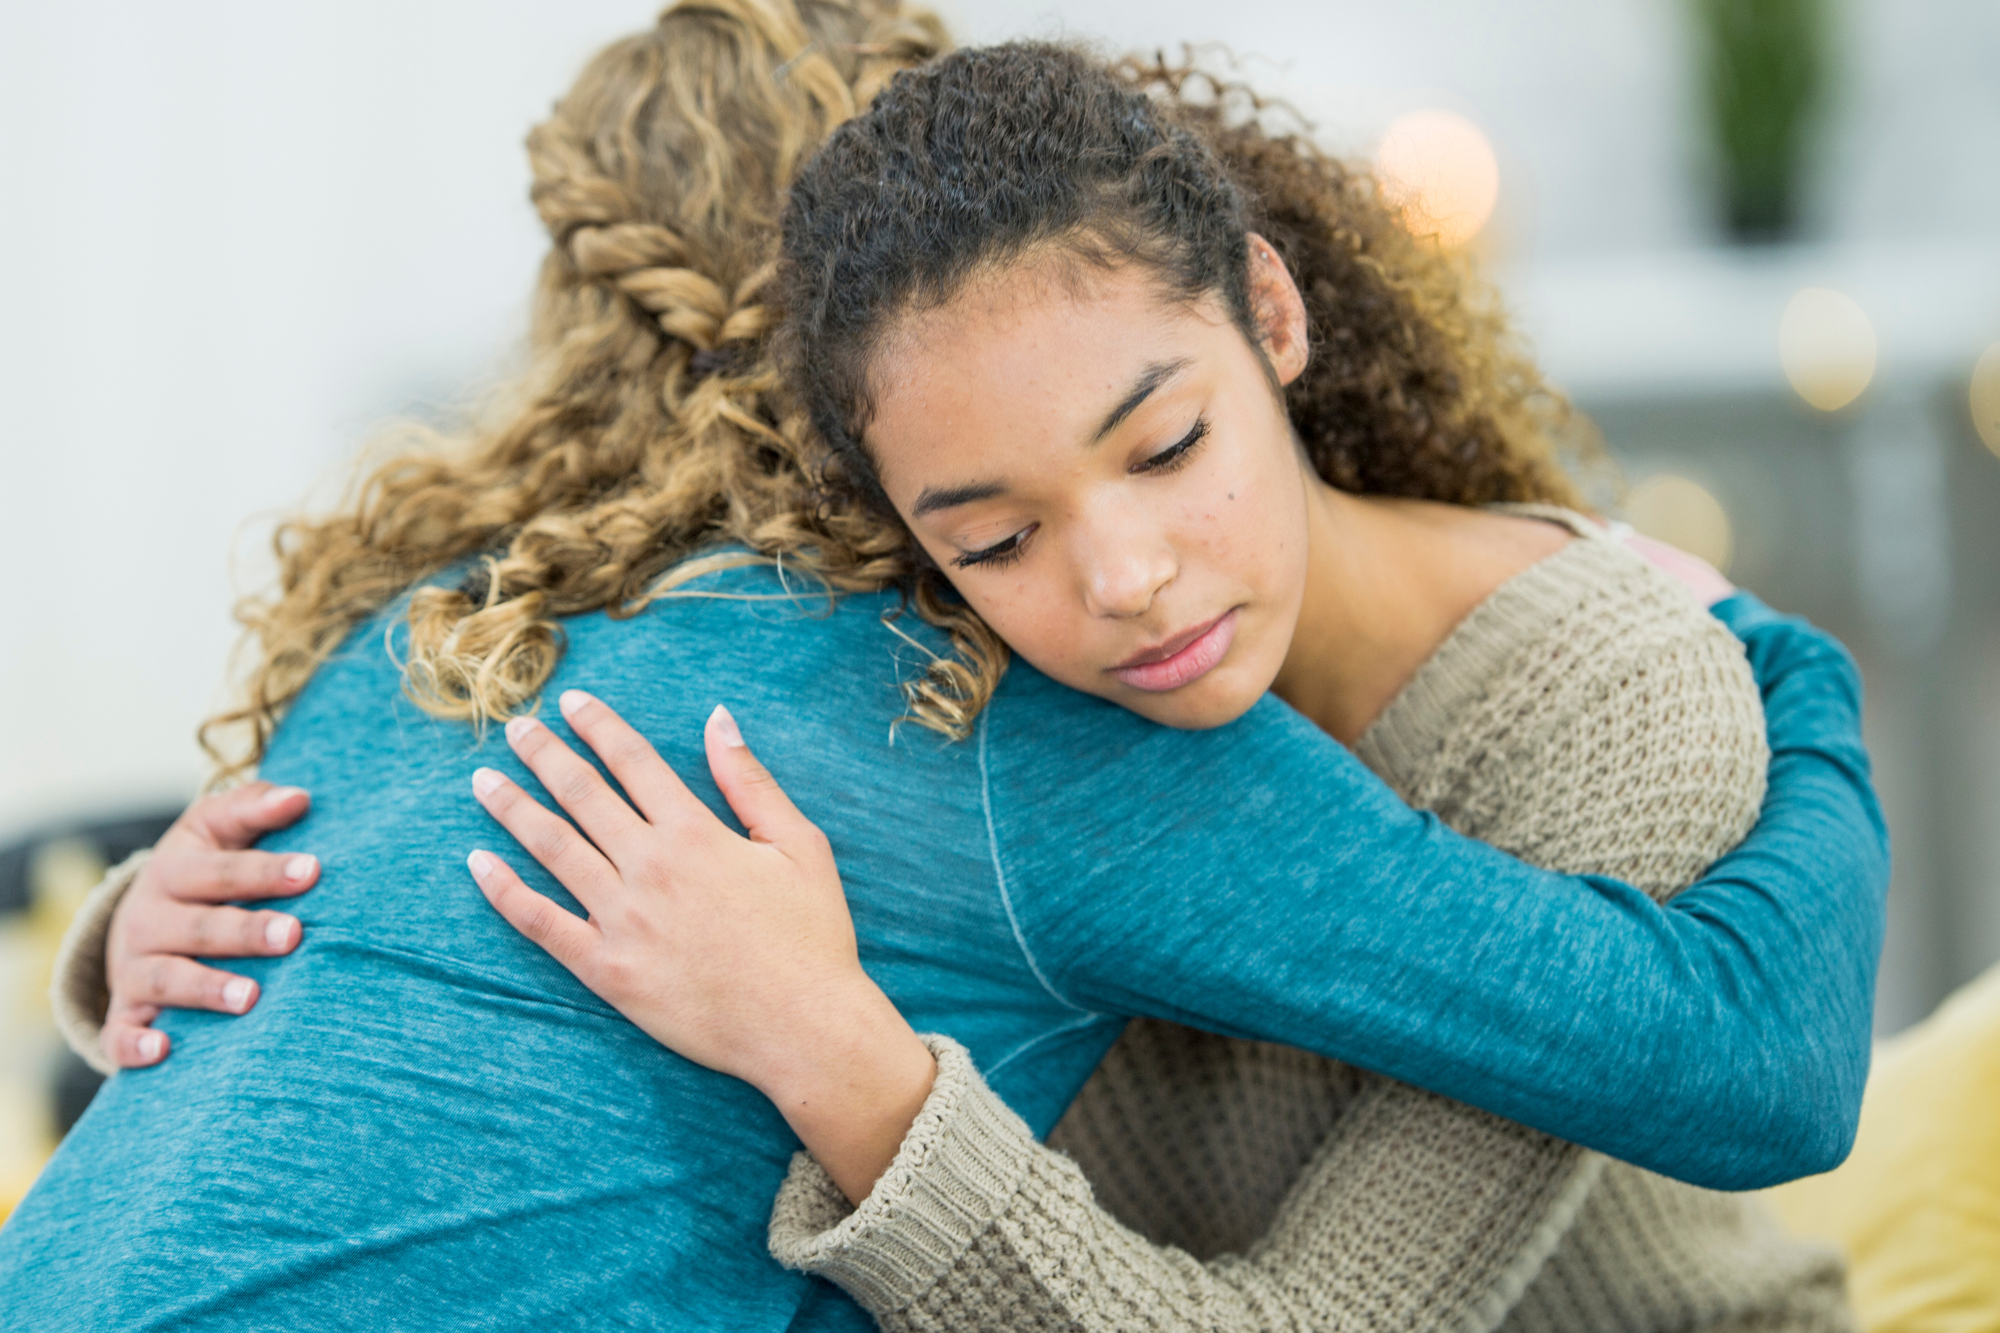 Mother in blue hugging teenage daughter